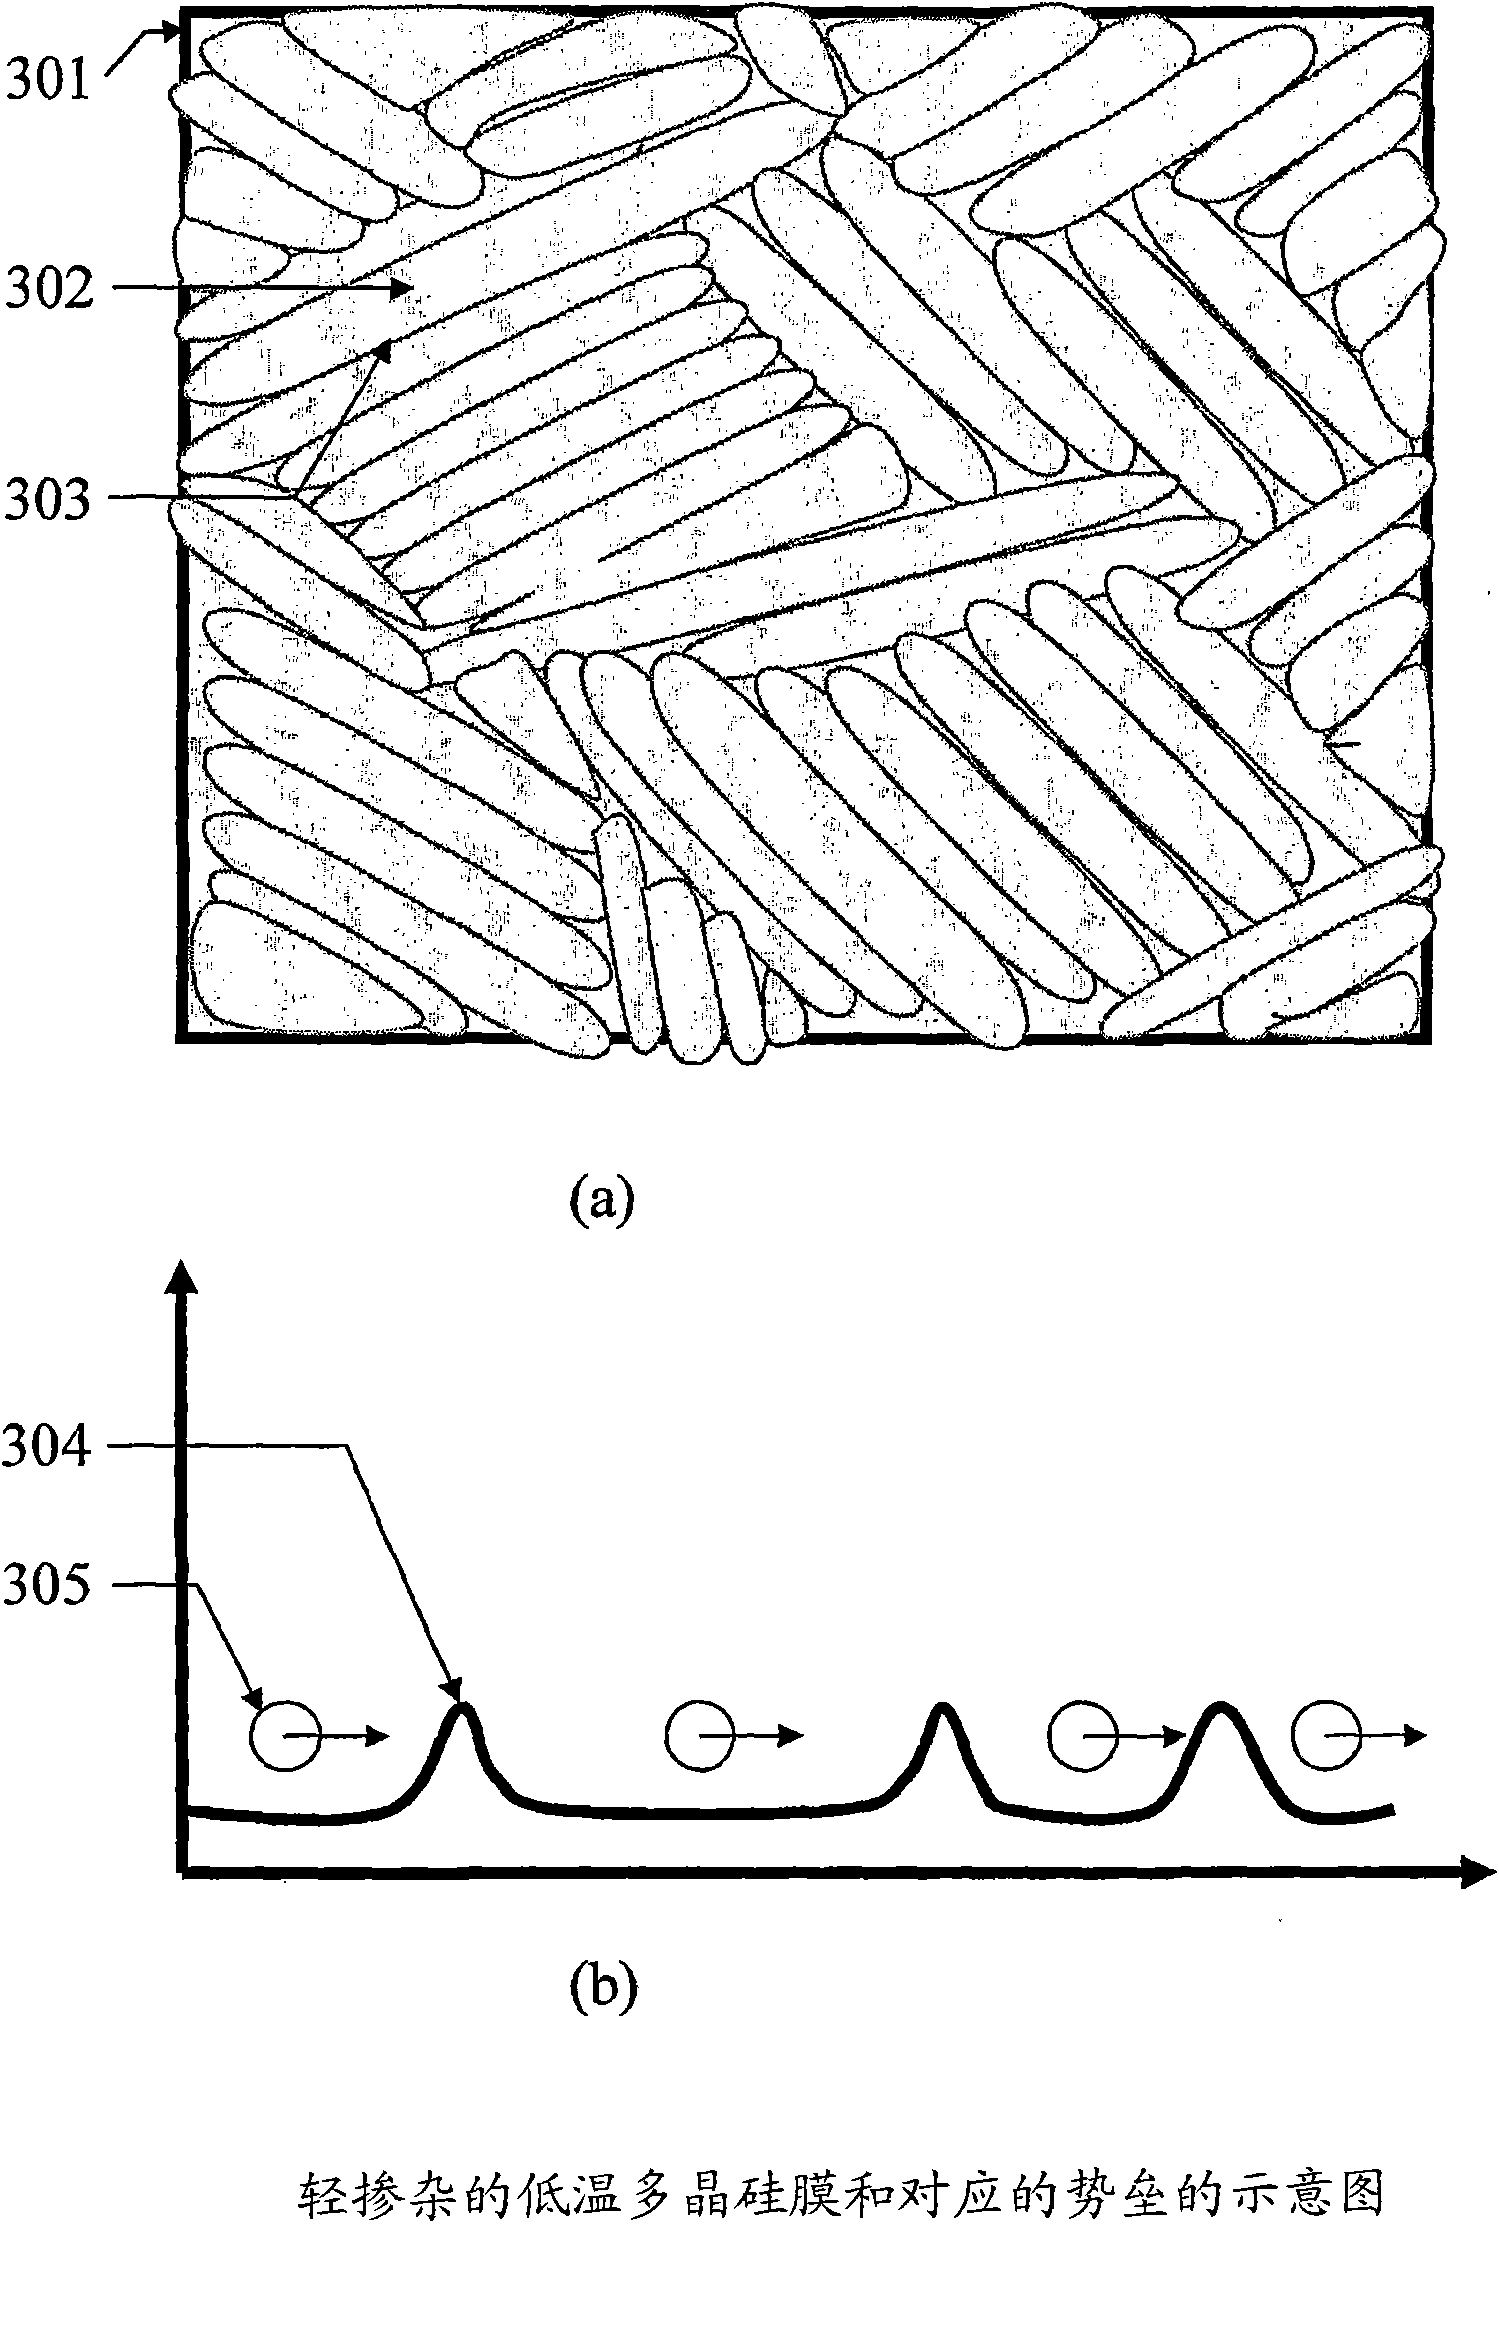 Polycrystalline silicon thin film transistors with bridged-grain structures